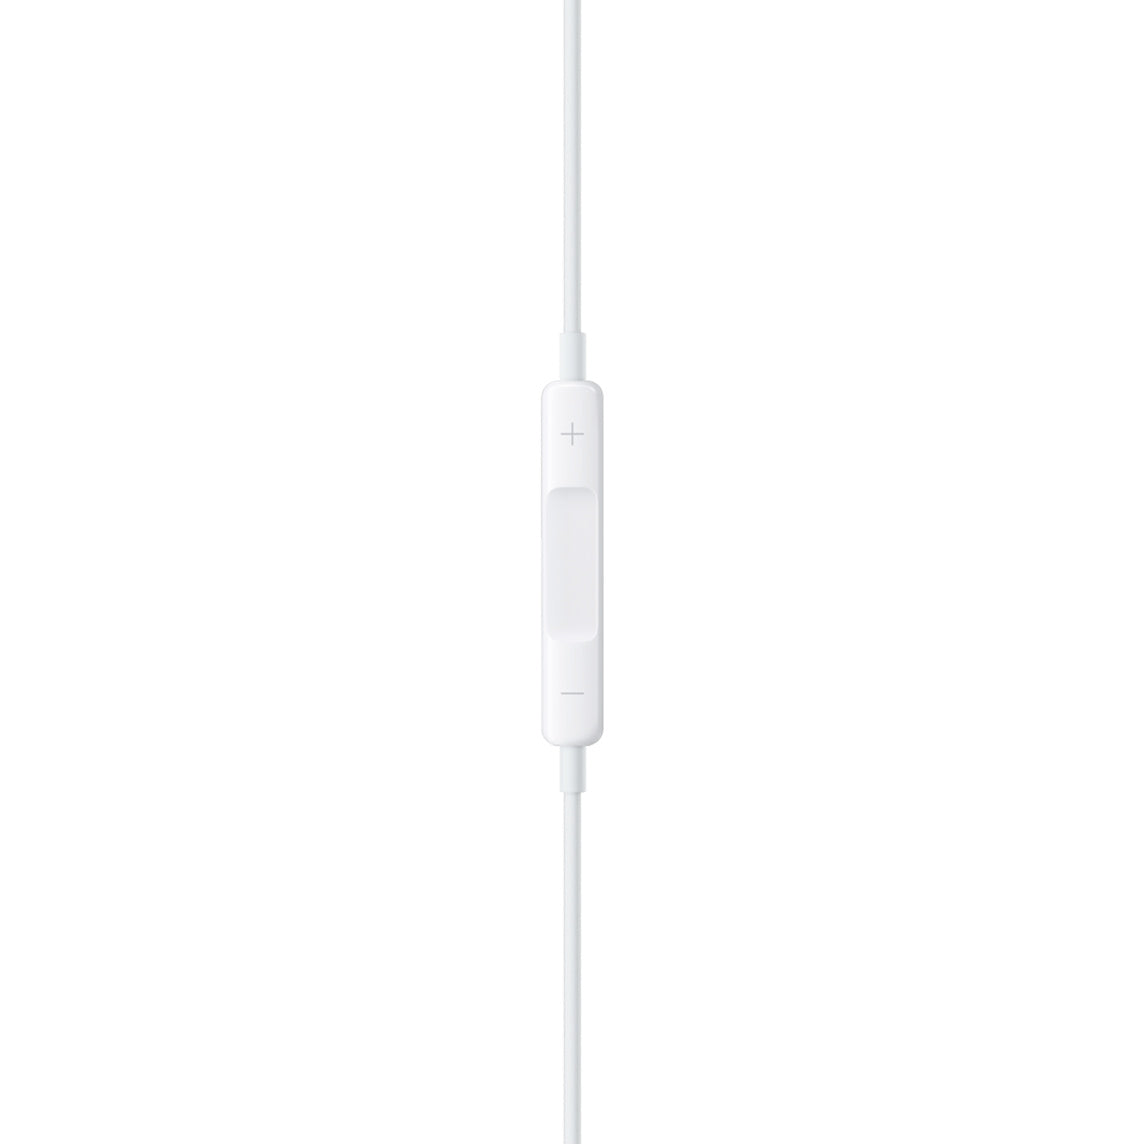 Apple EarPods Headphones with Lightning Connector